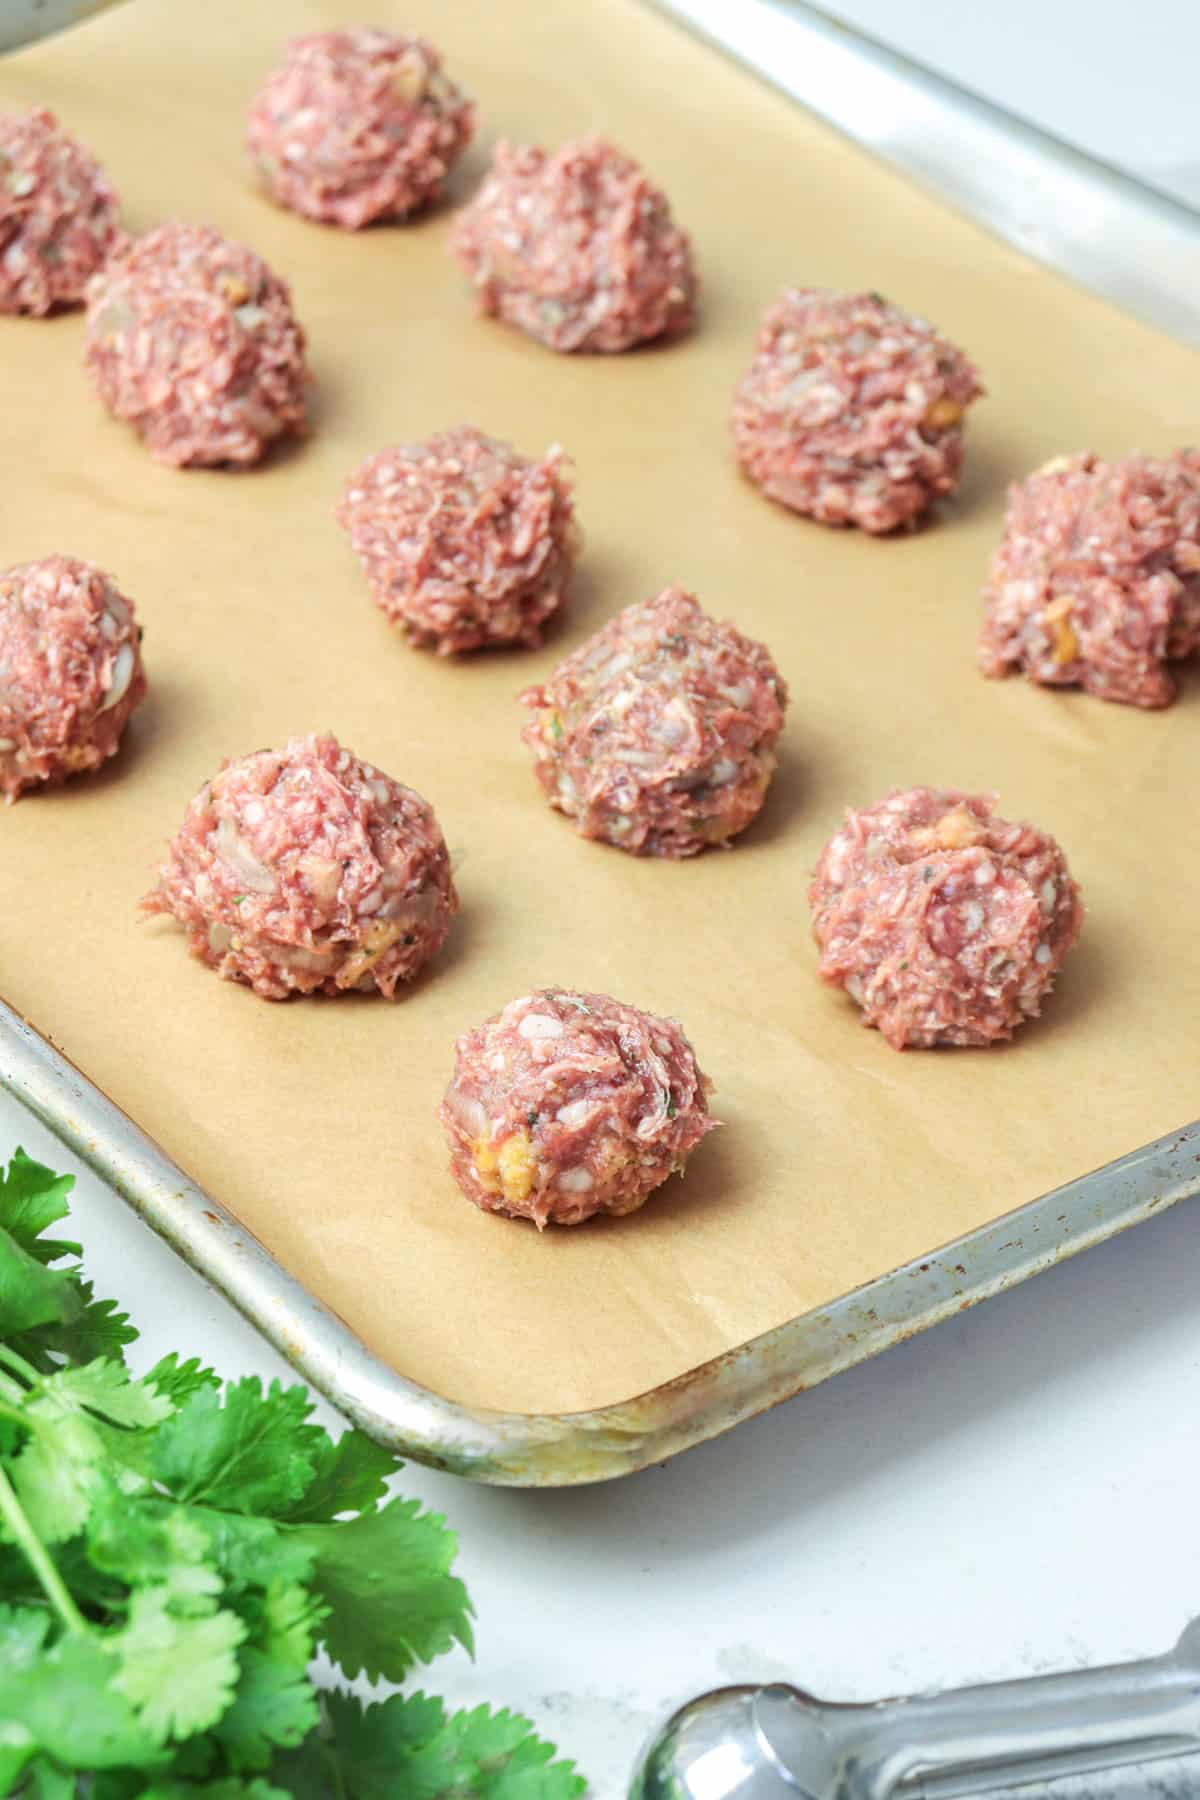 Raw lamb meatballs shaped into balls on a baking sheet.